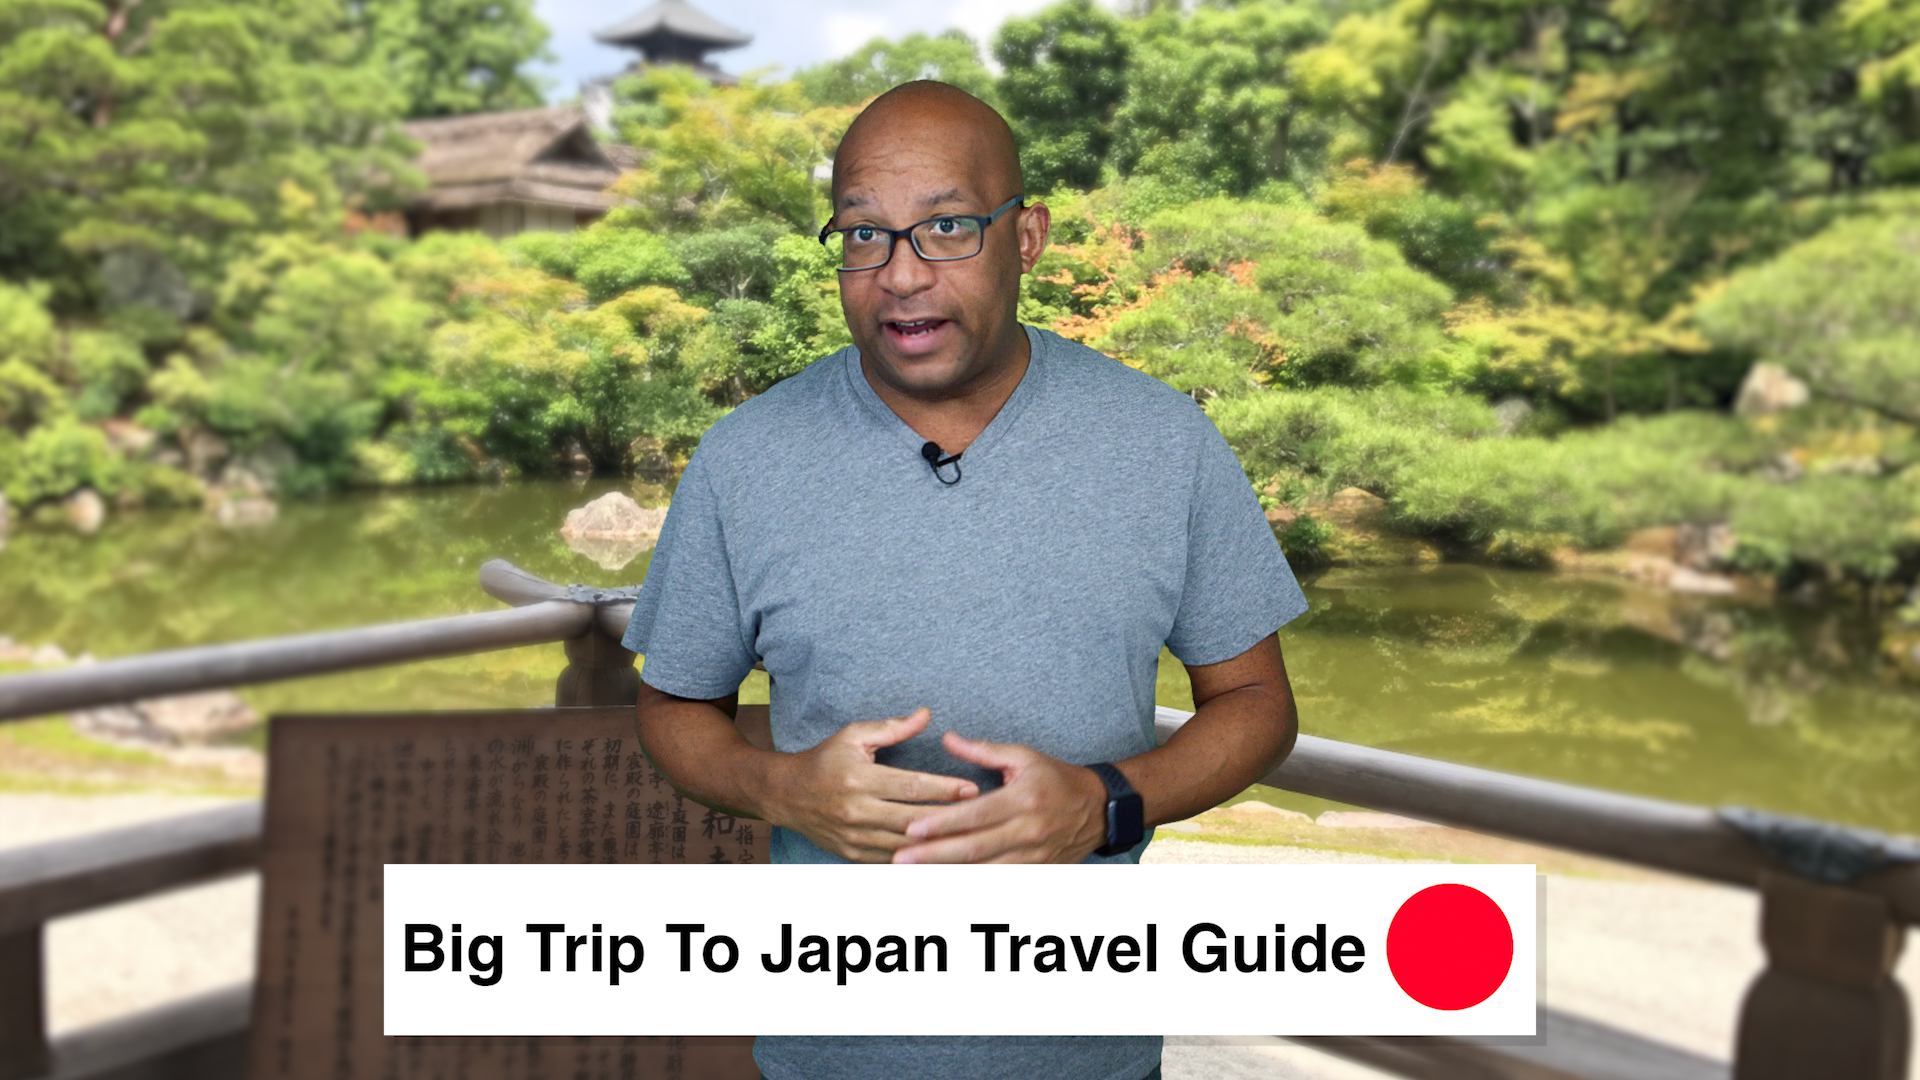 Disclaimer - Japan Travel Guide Book - Tourism Guide Travel Vlog